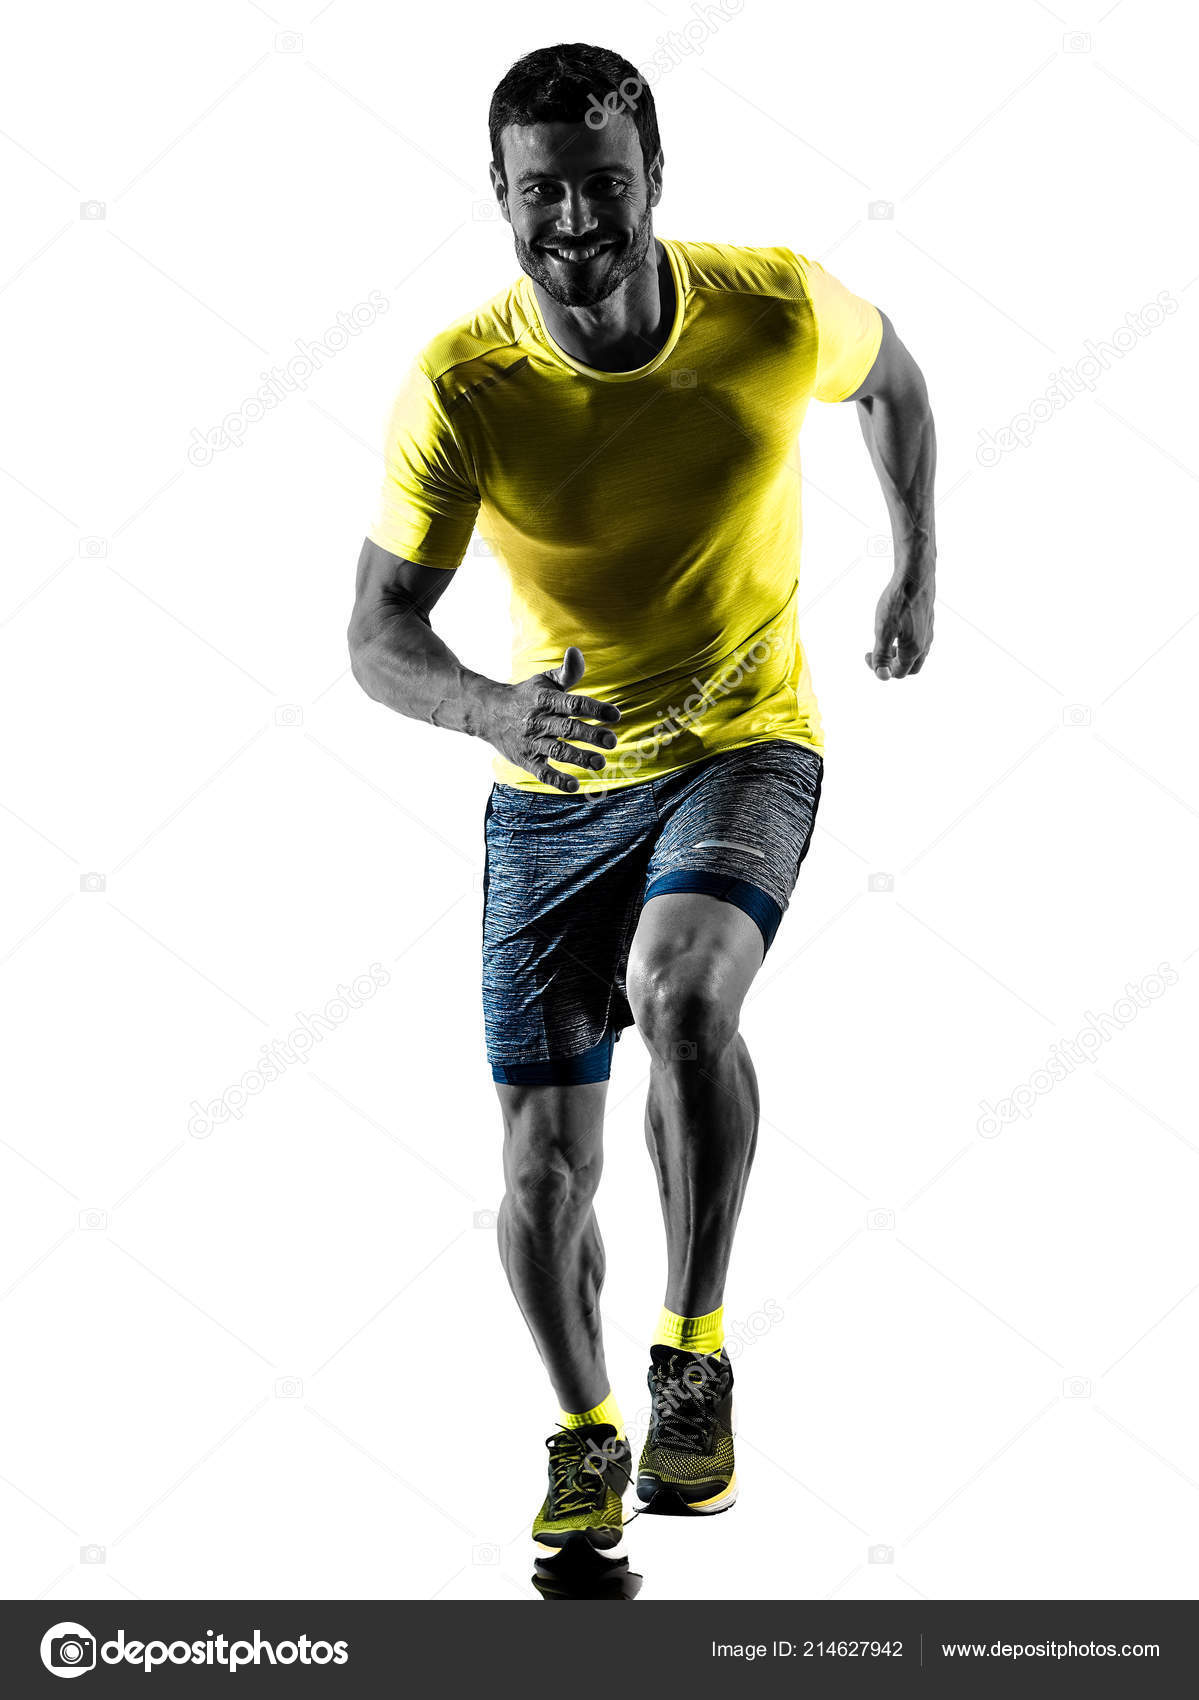 Homem corredor corredor corredor correndo silhueta isolada costas